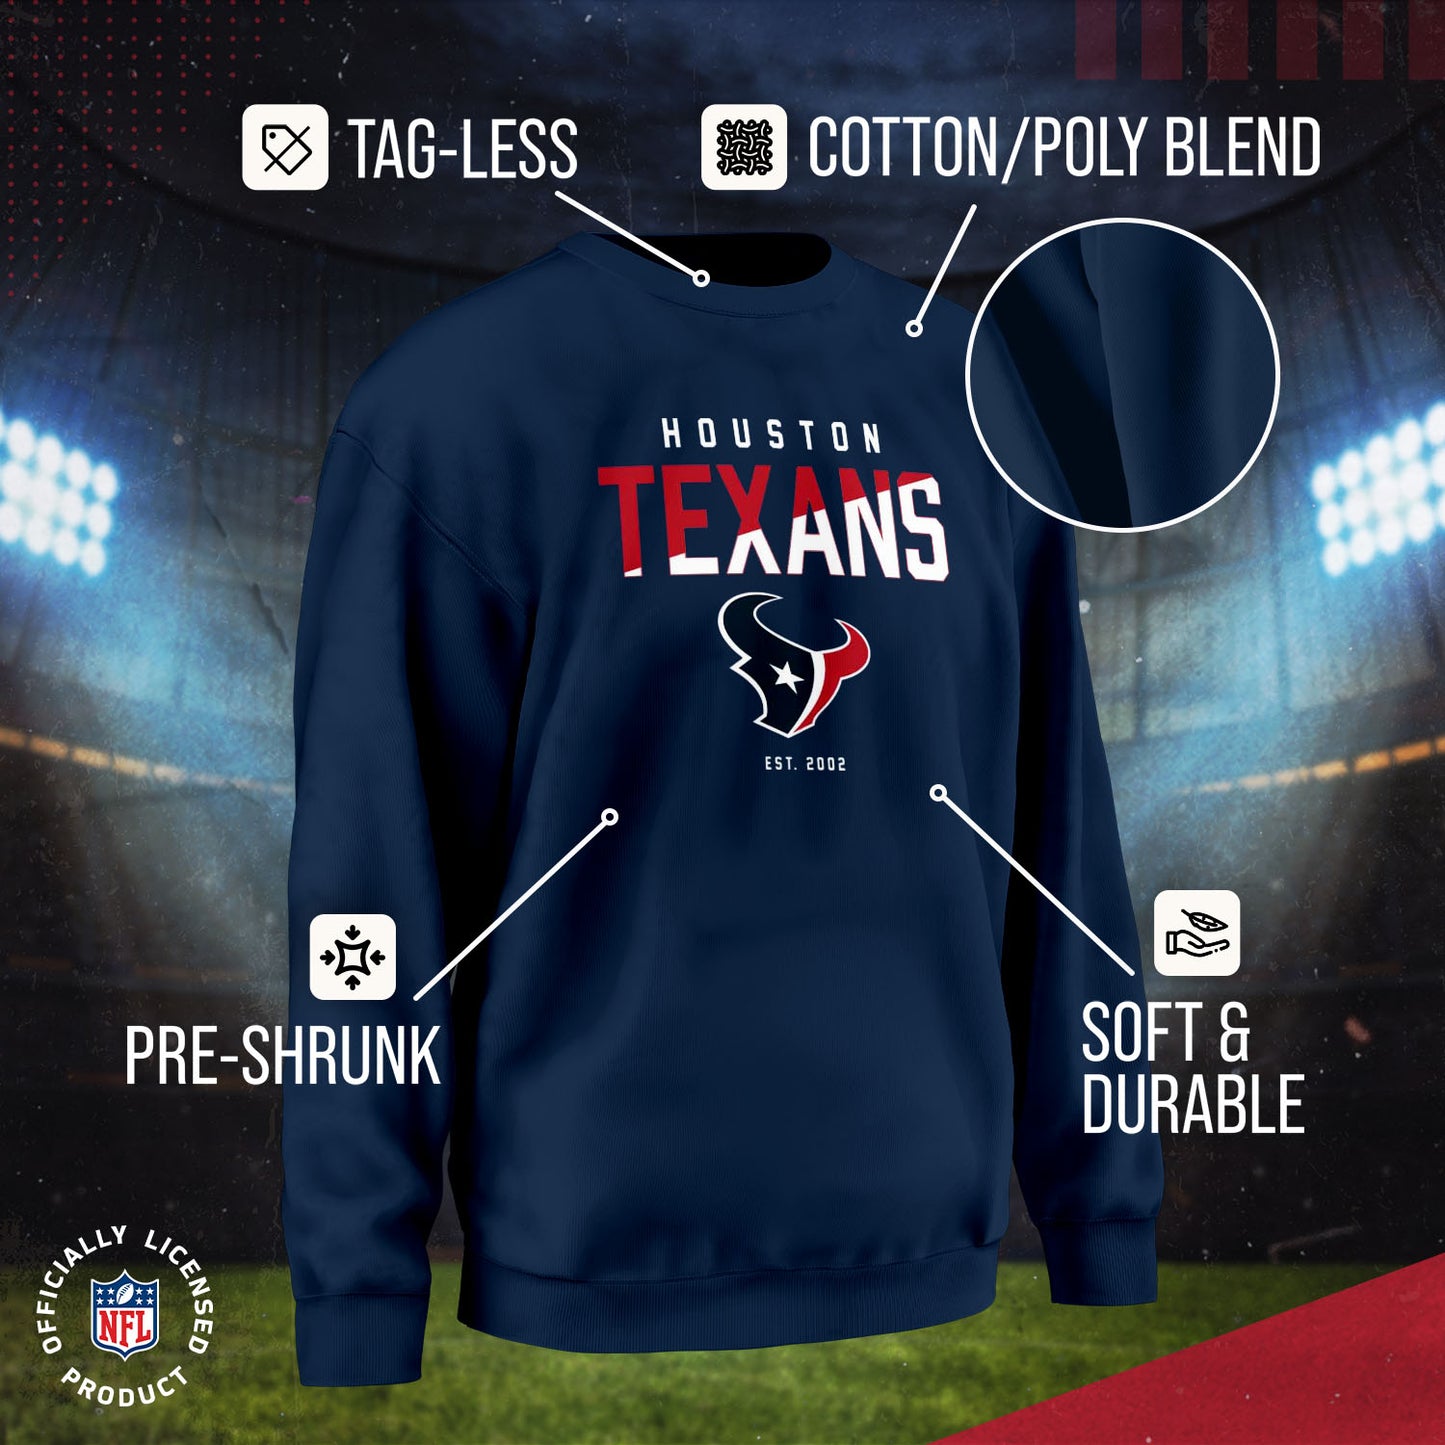 Houston Texans Adult NFL Diagonal Fade Color Block Crewneck Sweatshirt - Navy